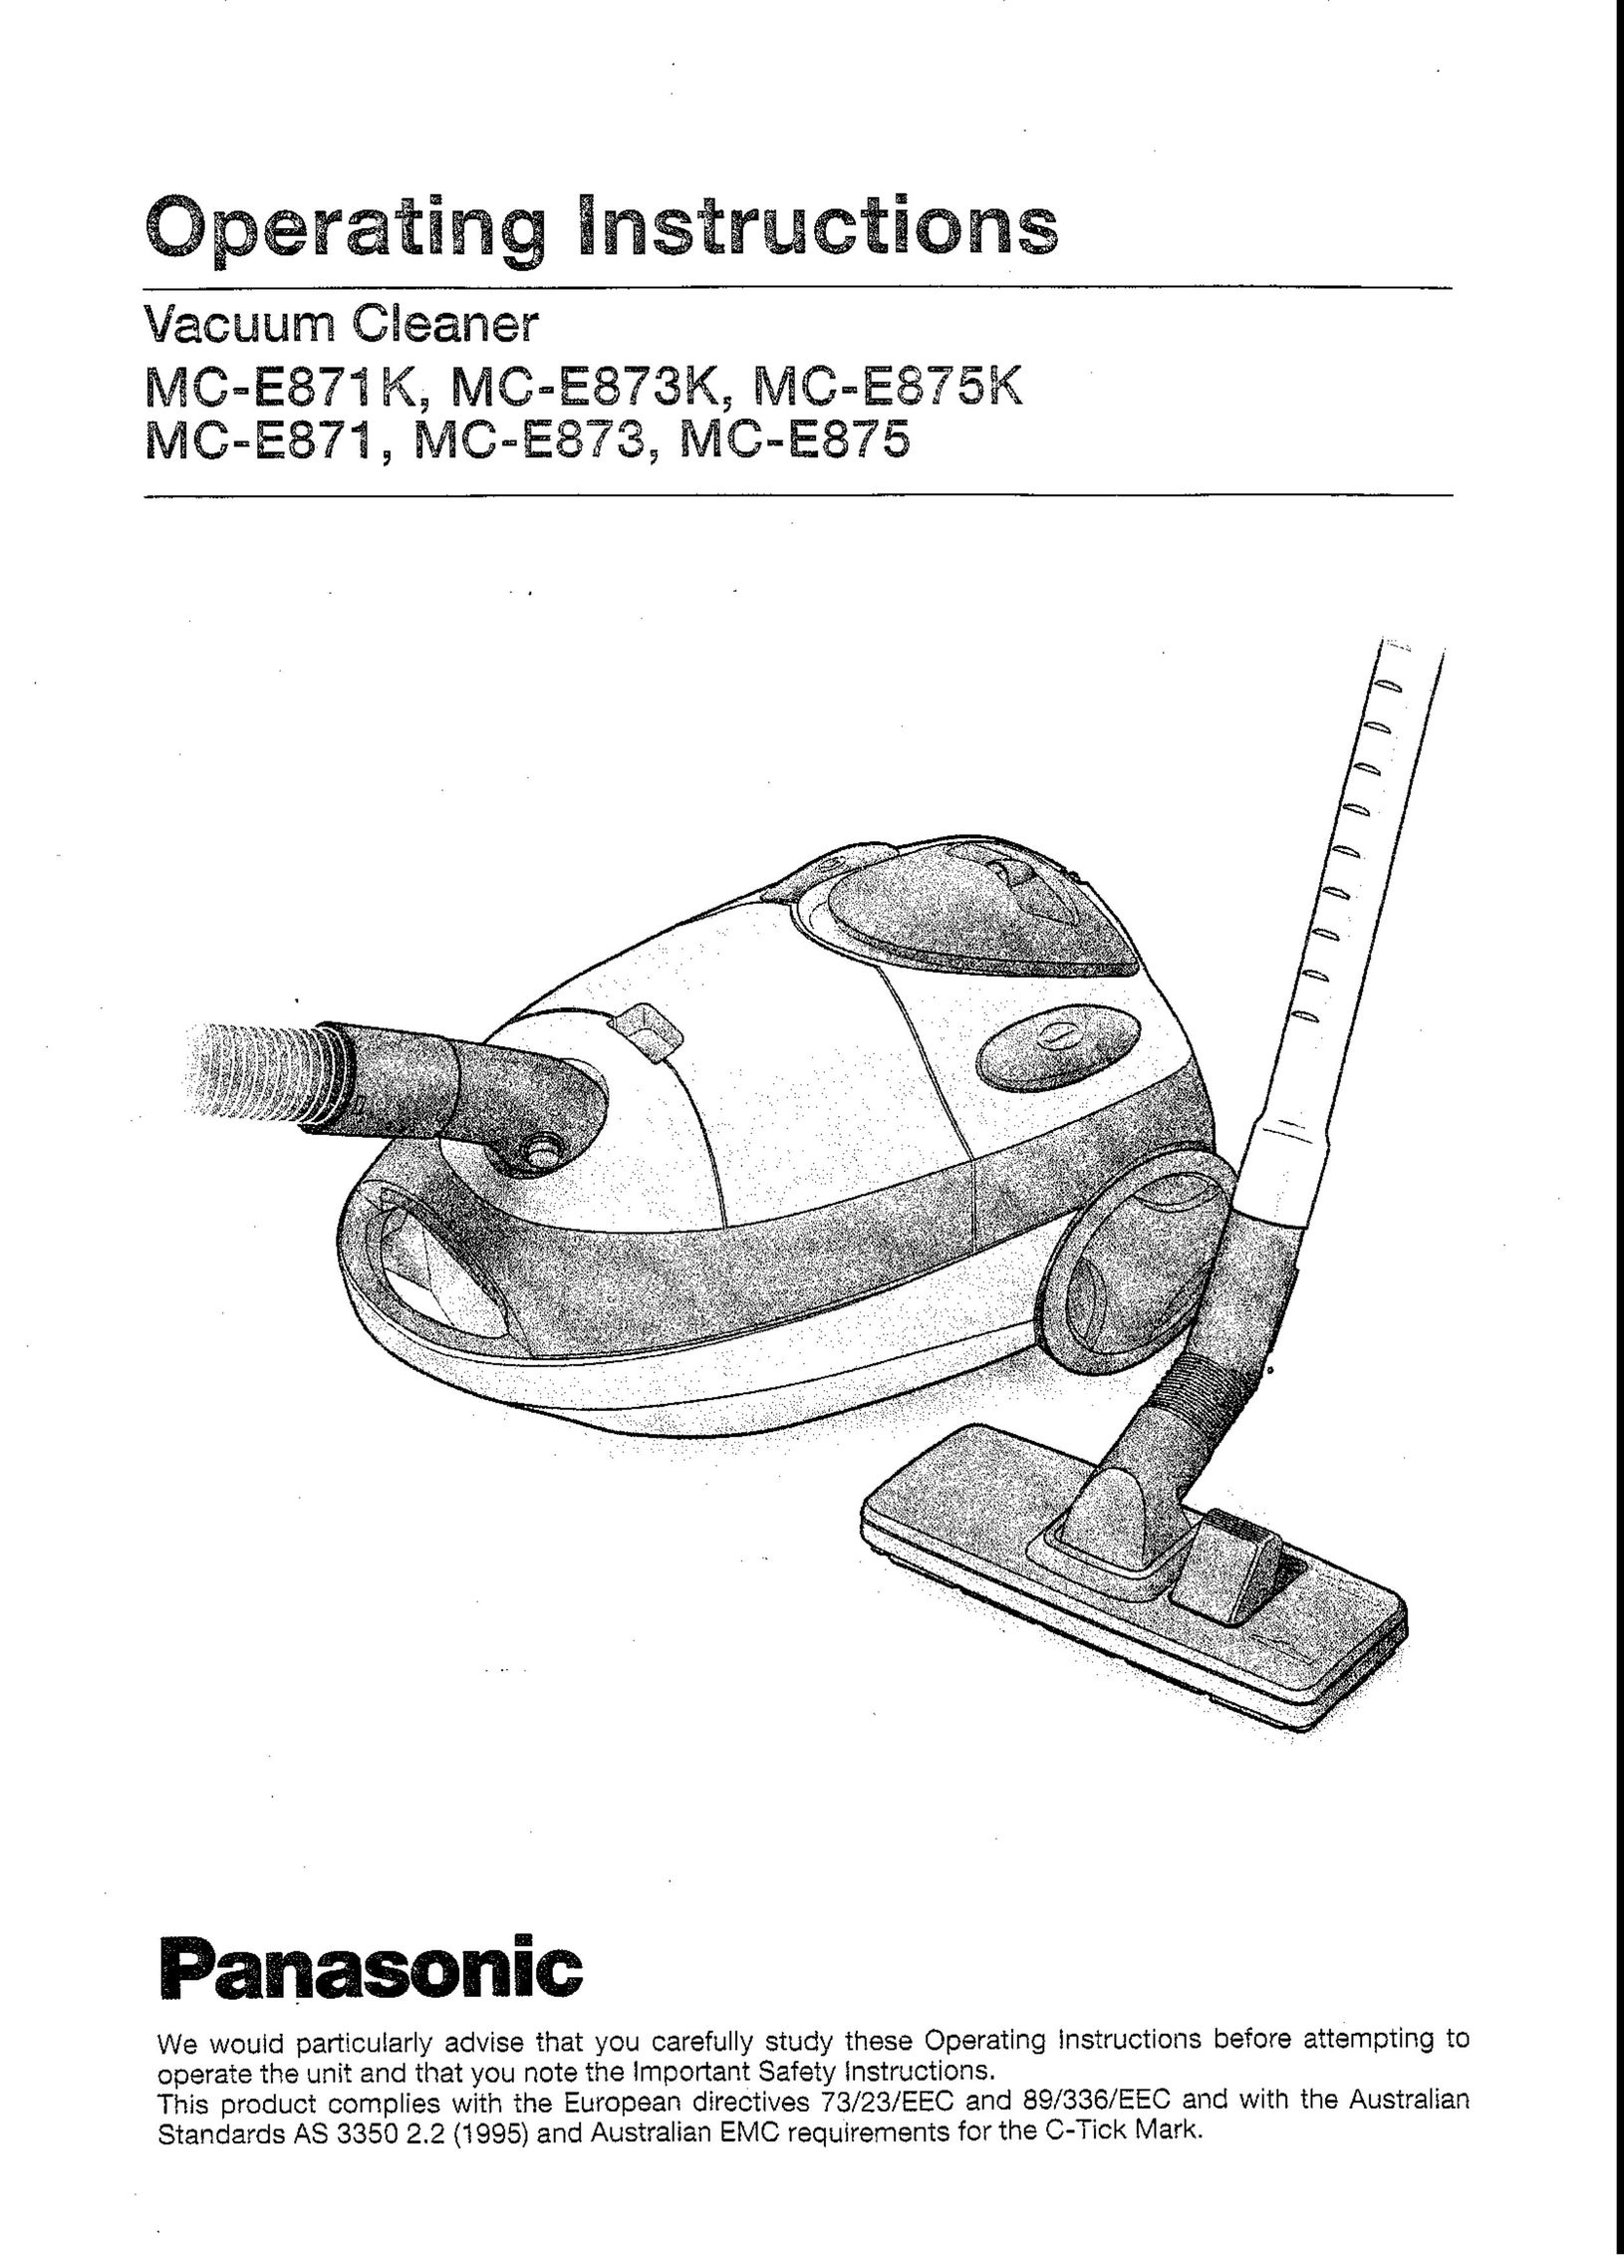 Panasonic MC-E875K Vacuum Cleaner User Manual